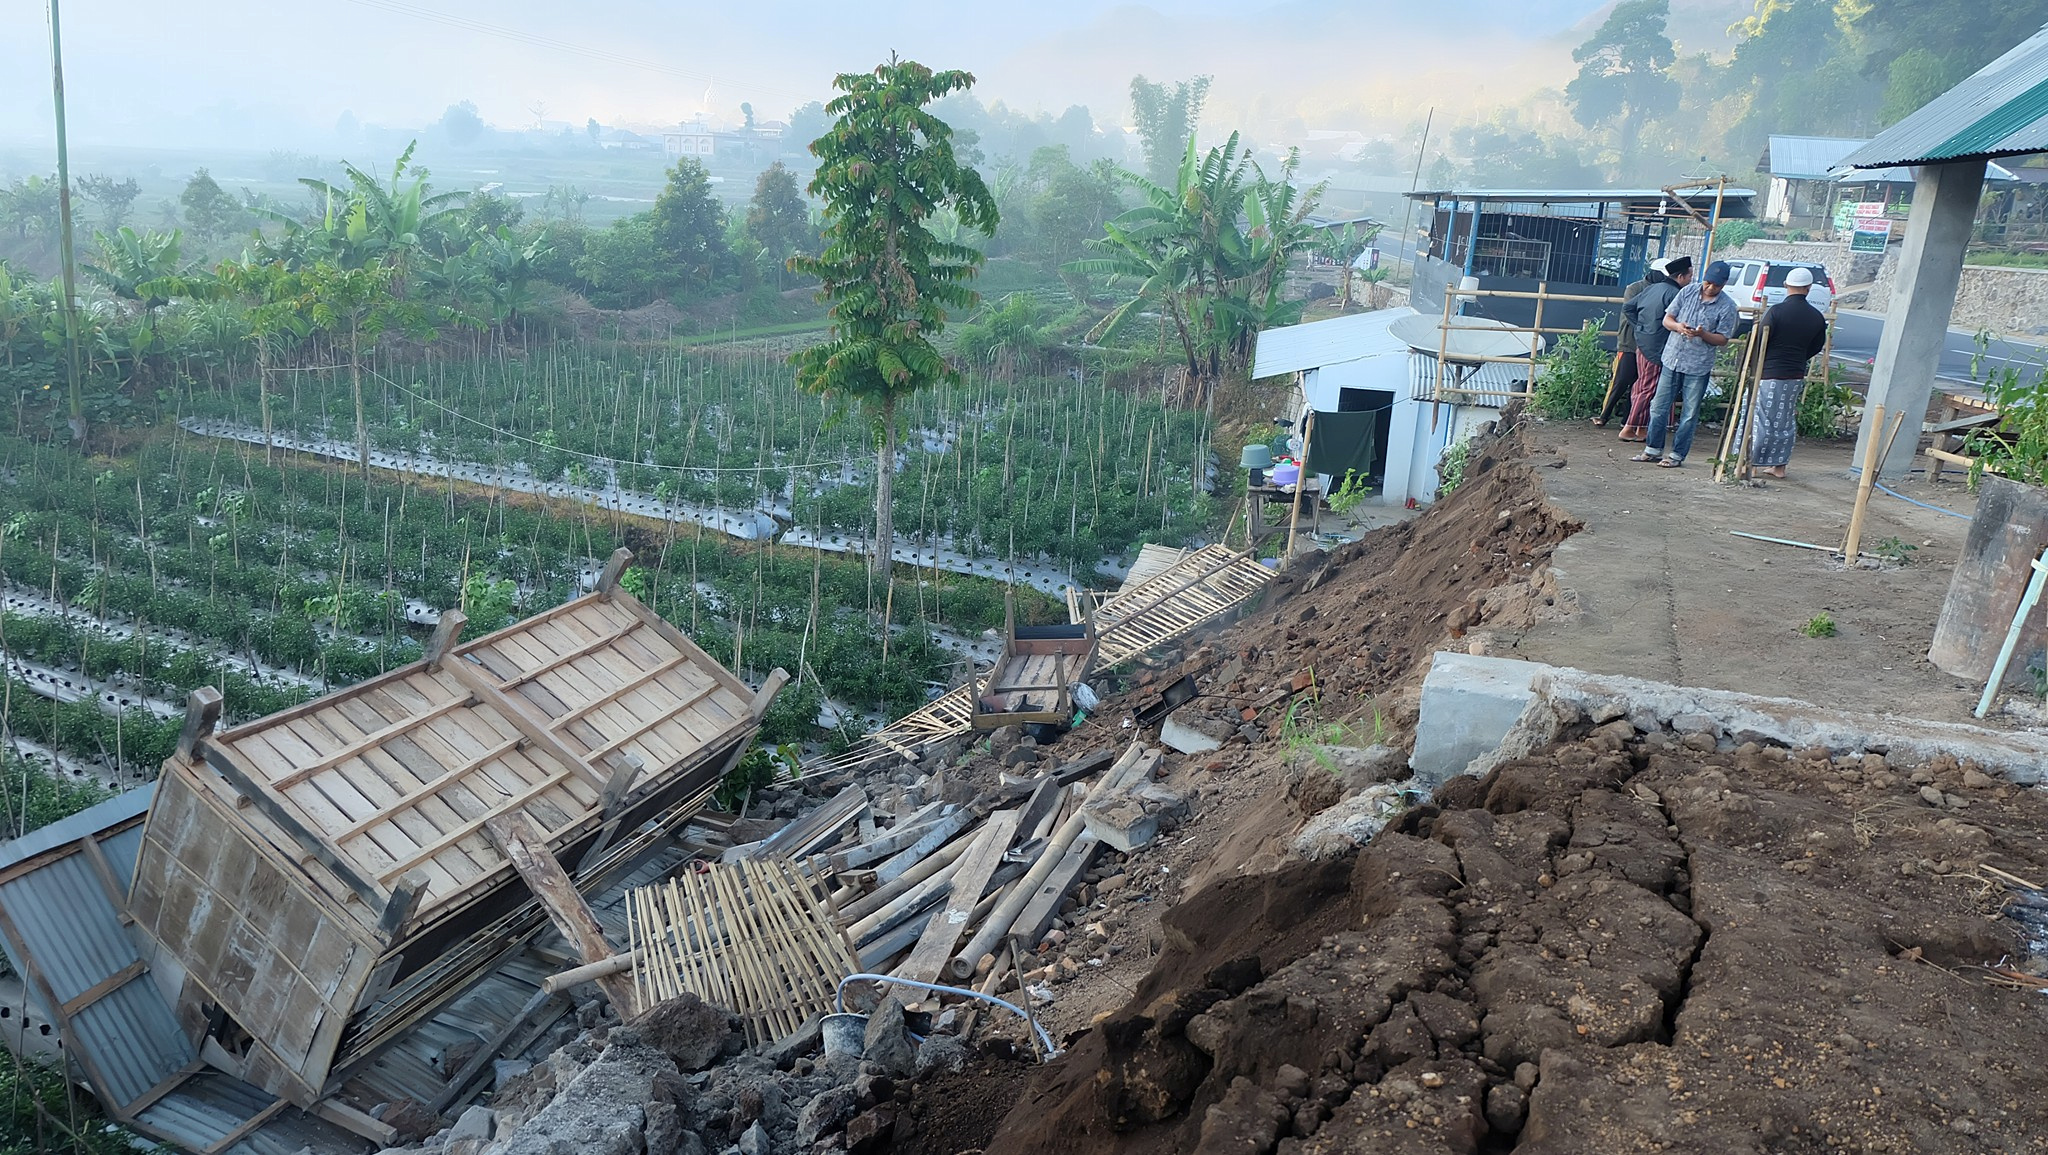 Damage is seen following an earthquake in Lombok